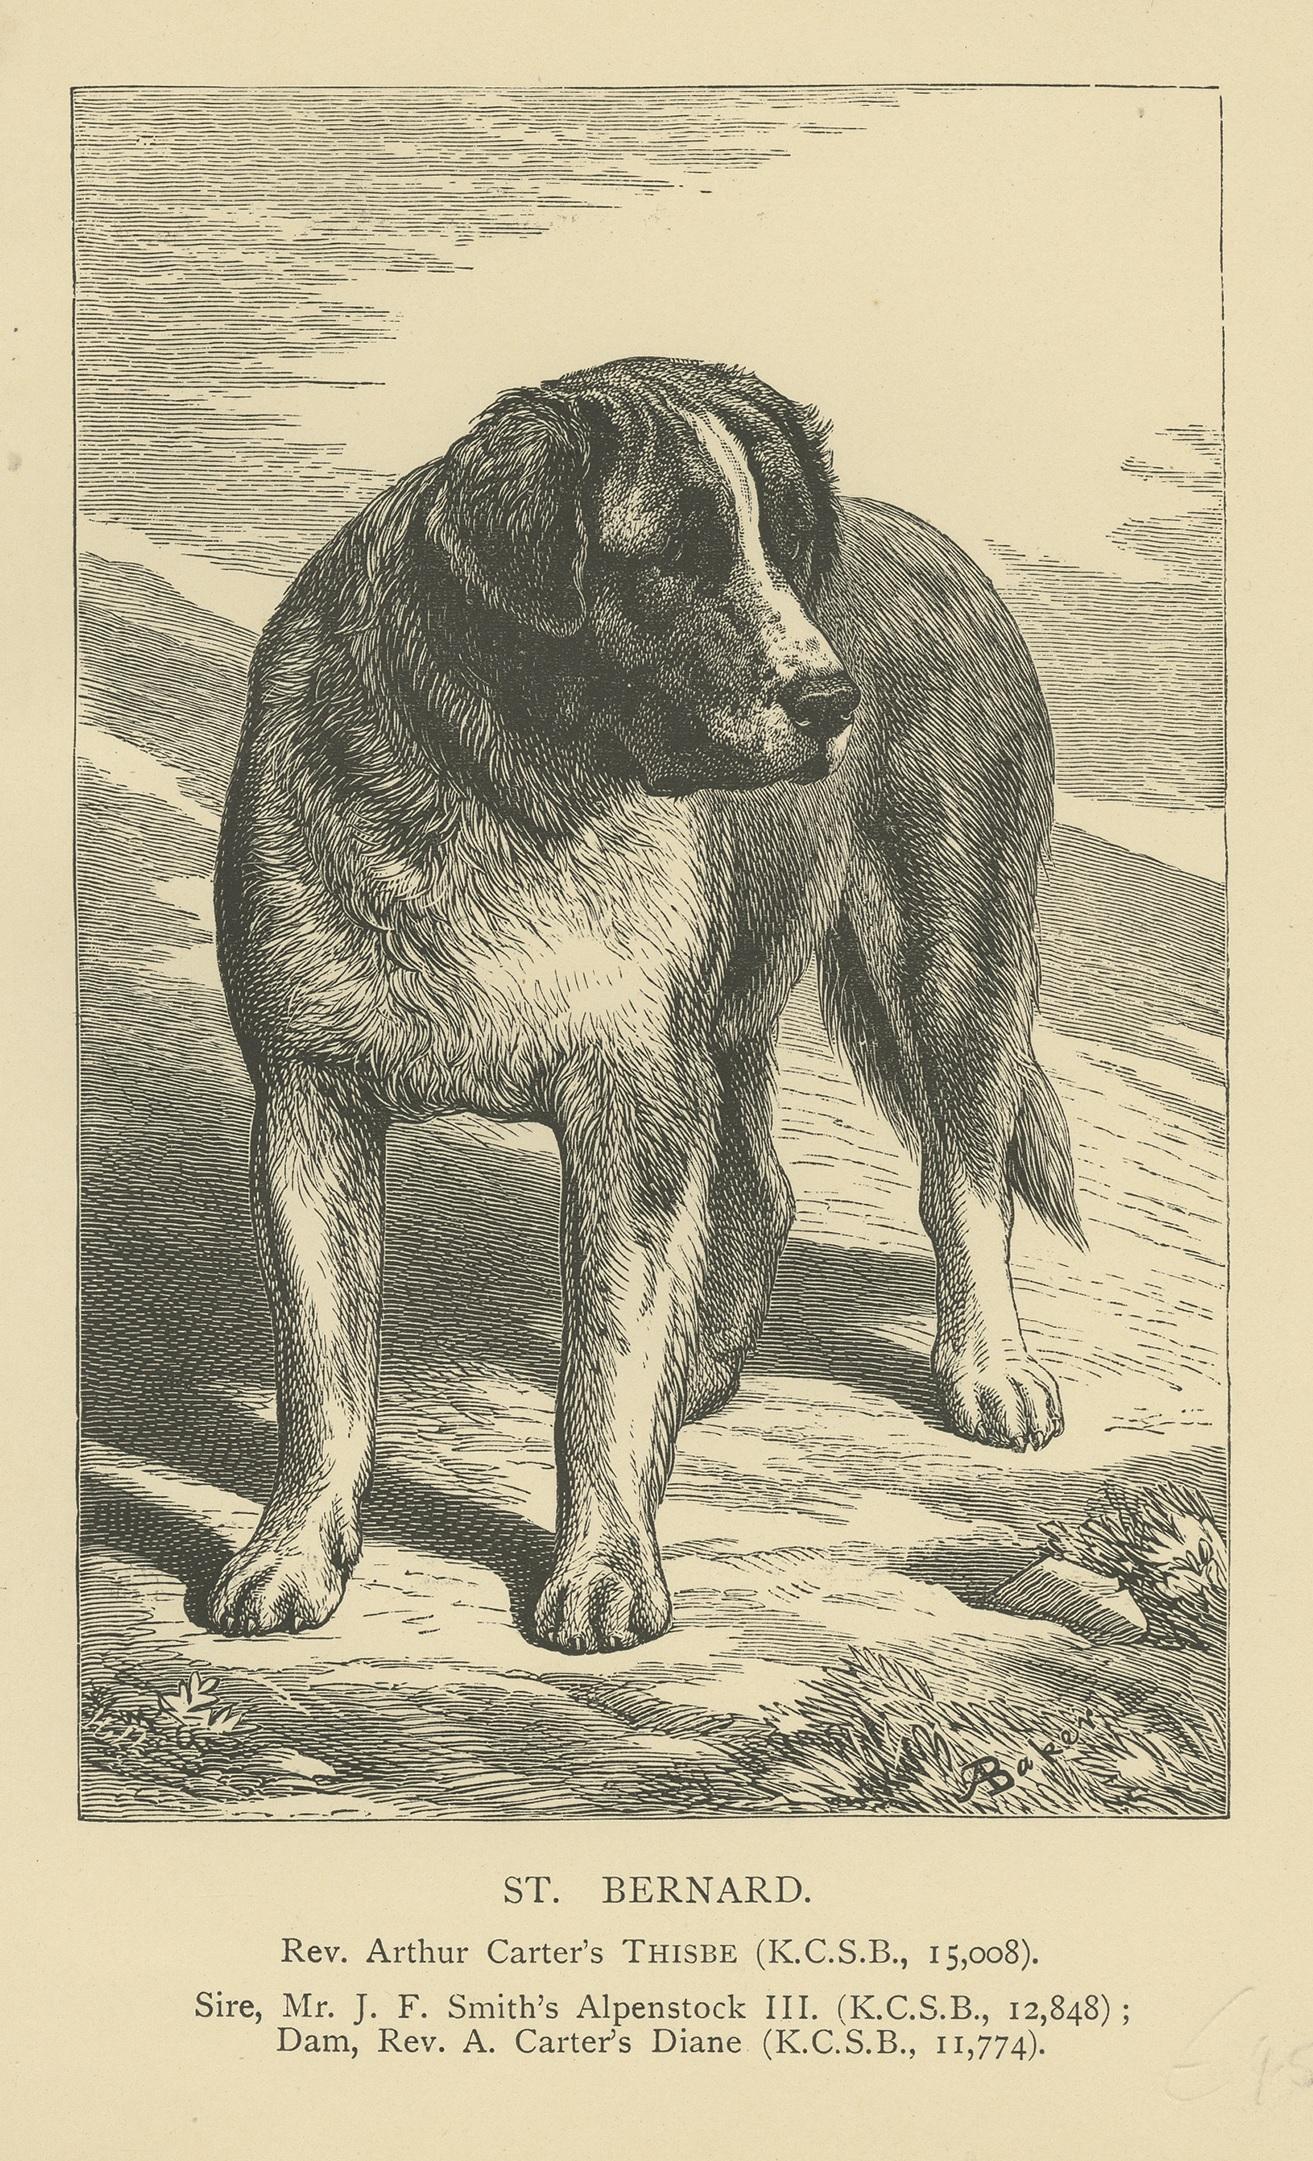 Antique print titled 'St. Bernard'. Old print of the Saint Bernard dog. Published circa 1900.